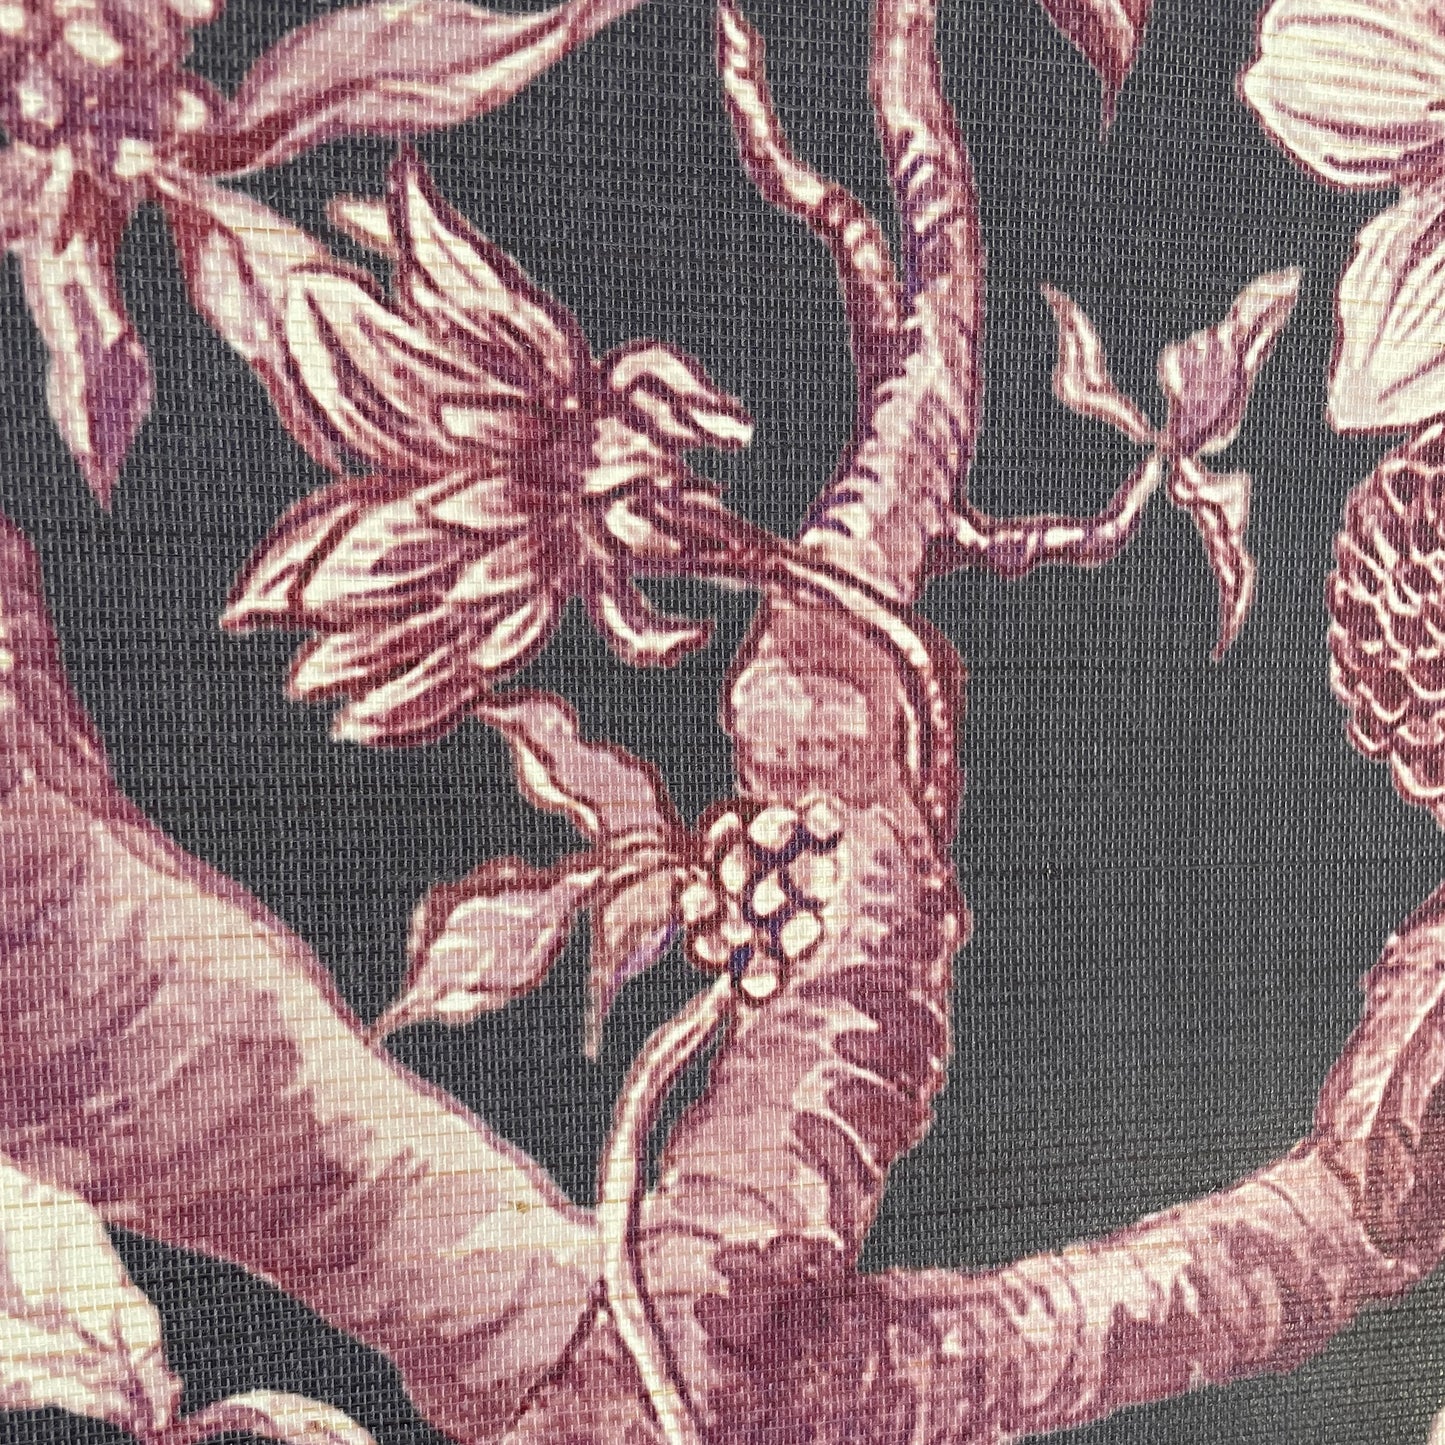 Chinoiserie Garden Grasscloth Wallpaper